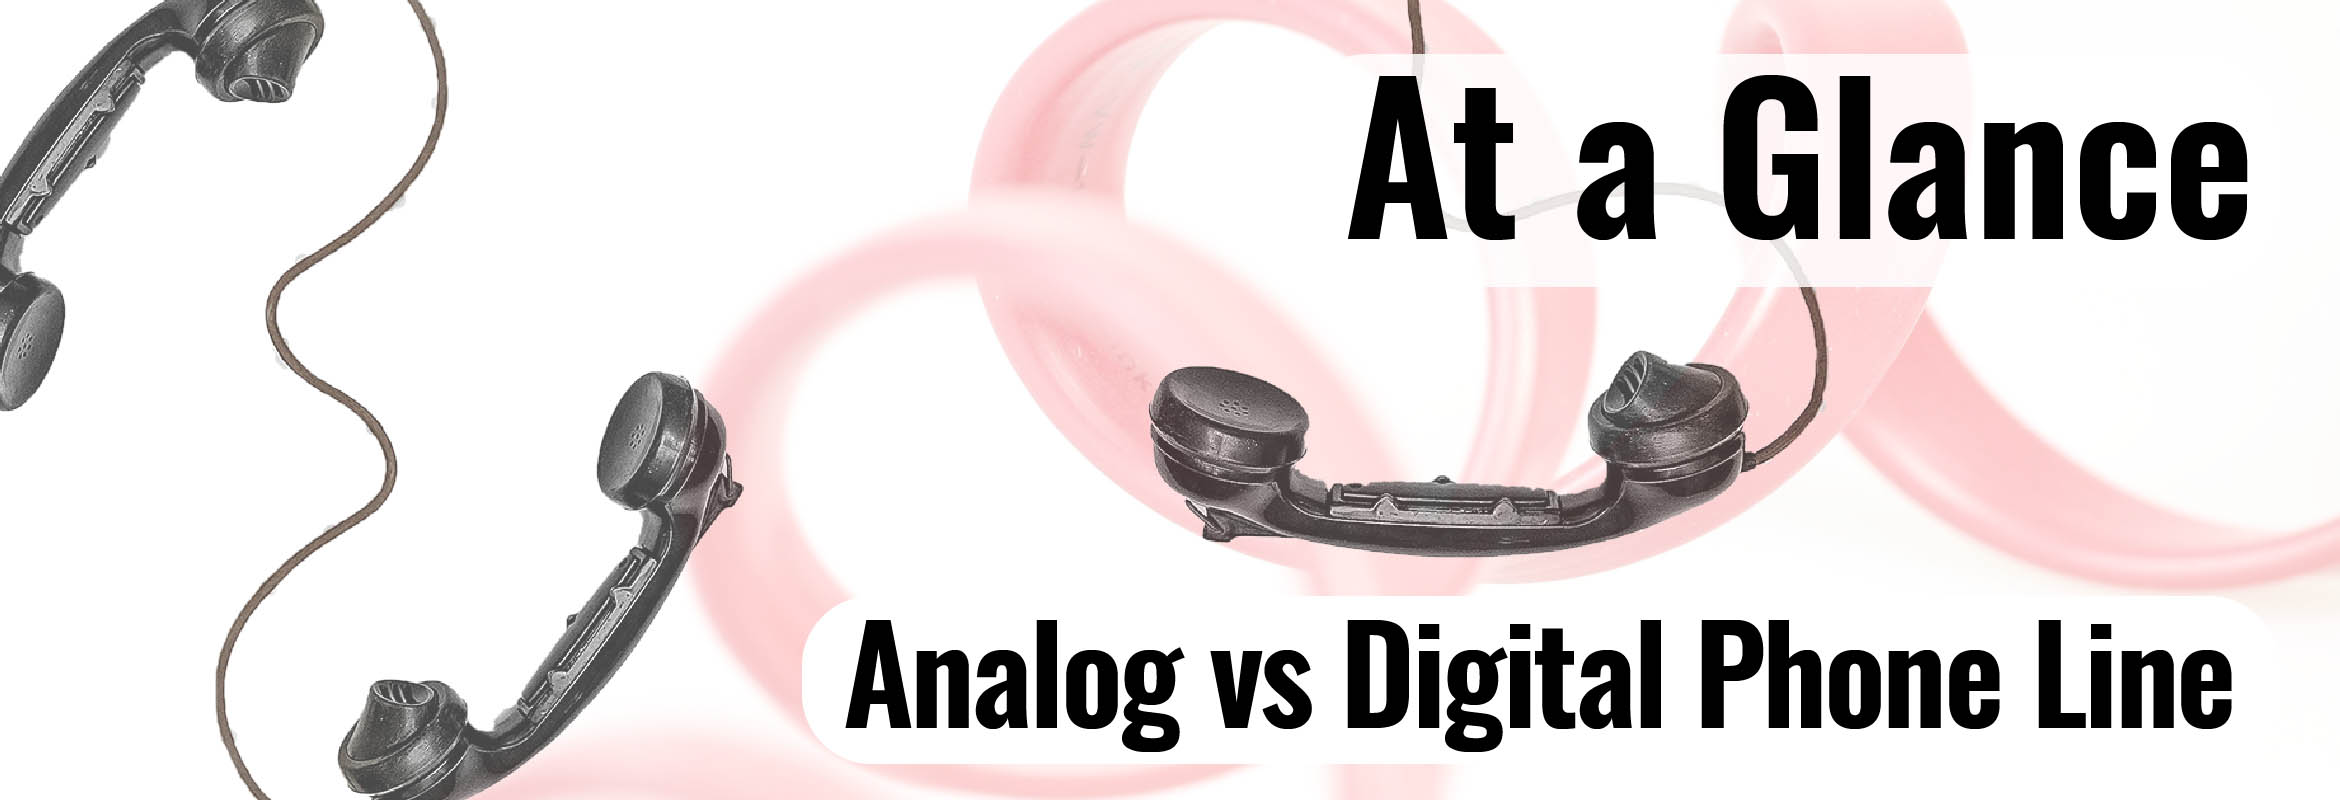 Analog vs Digital Phone Line by Hello Direct